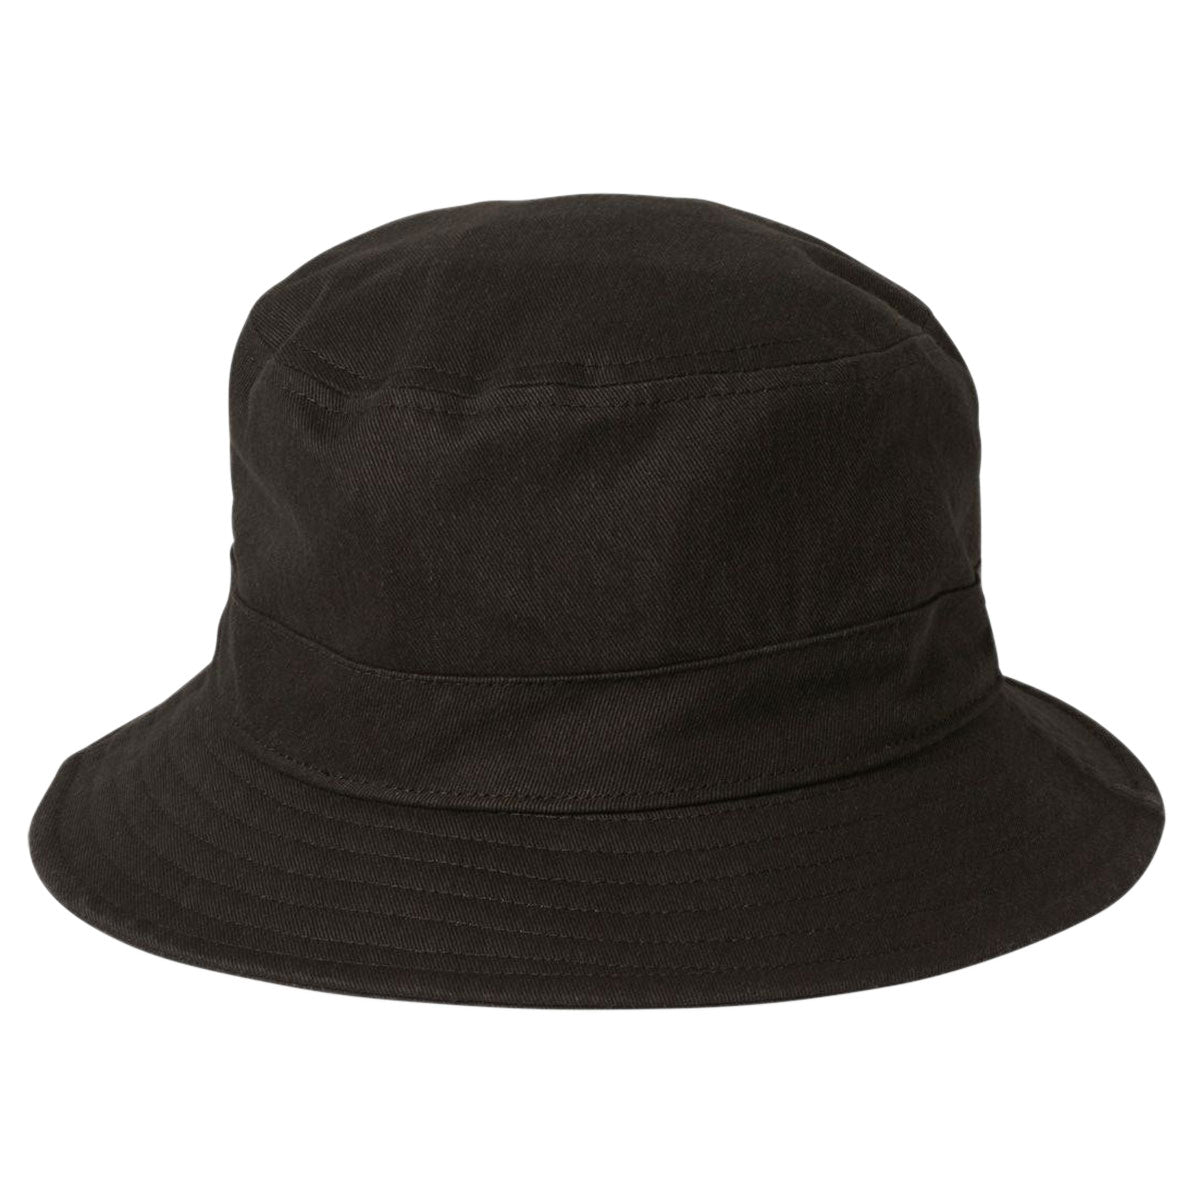 Brixton Woodburn Packable Bucket Hat - Black Sol Wash image 2